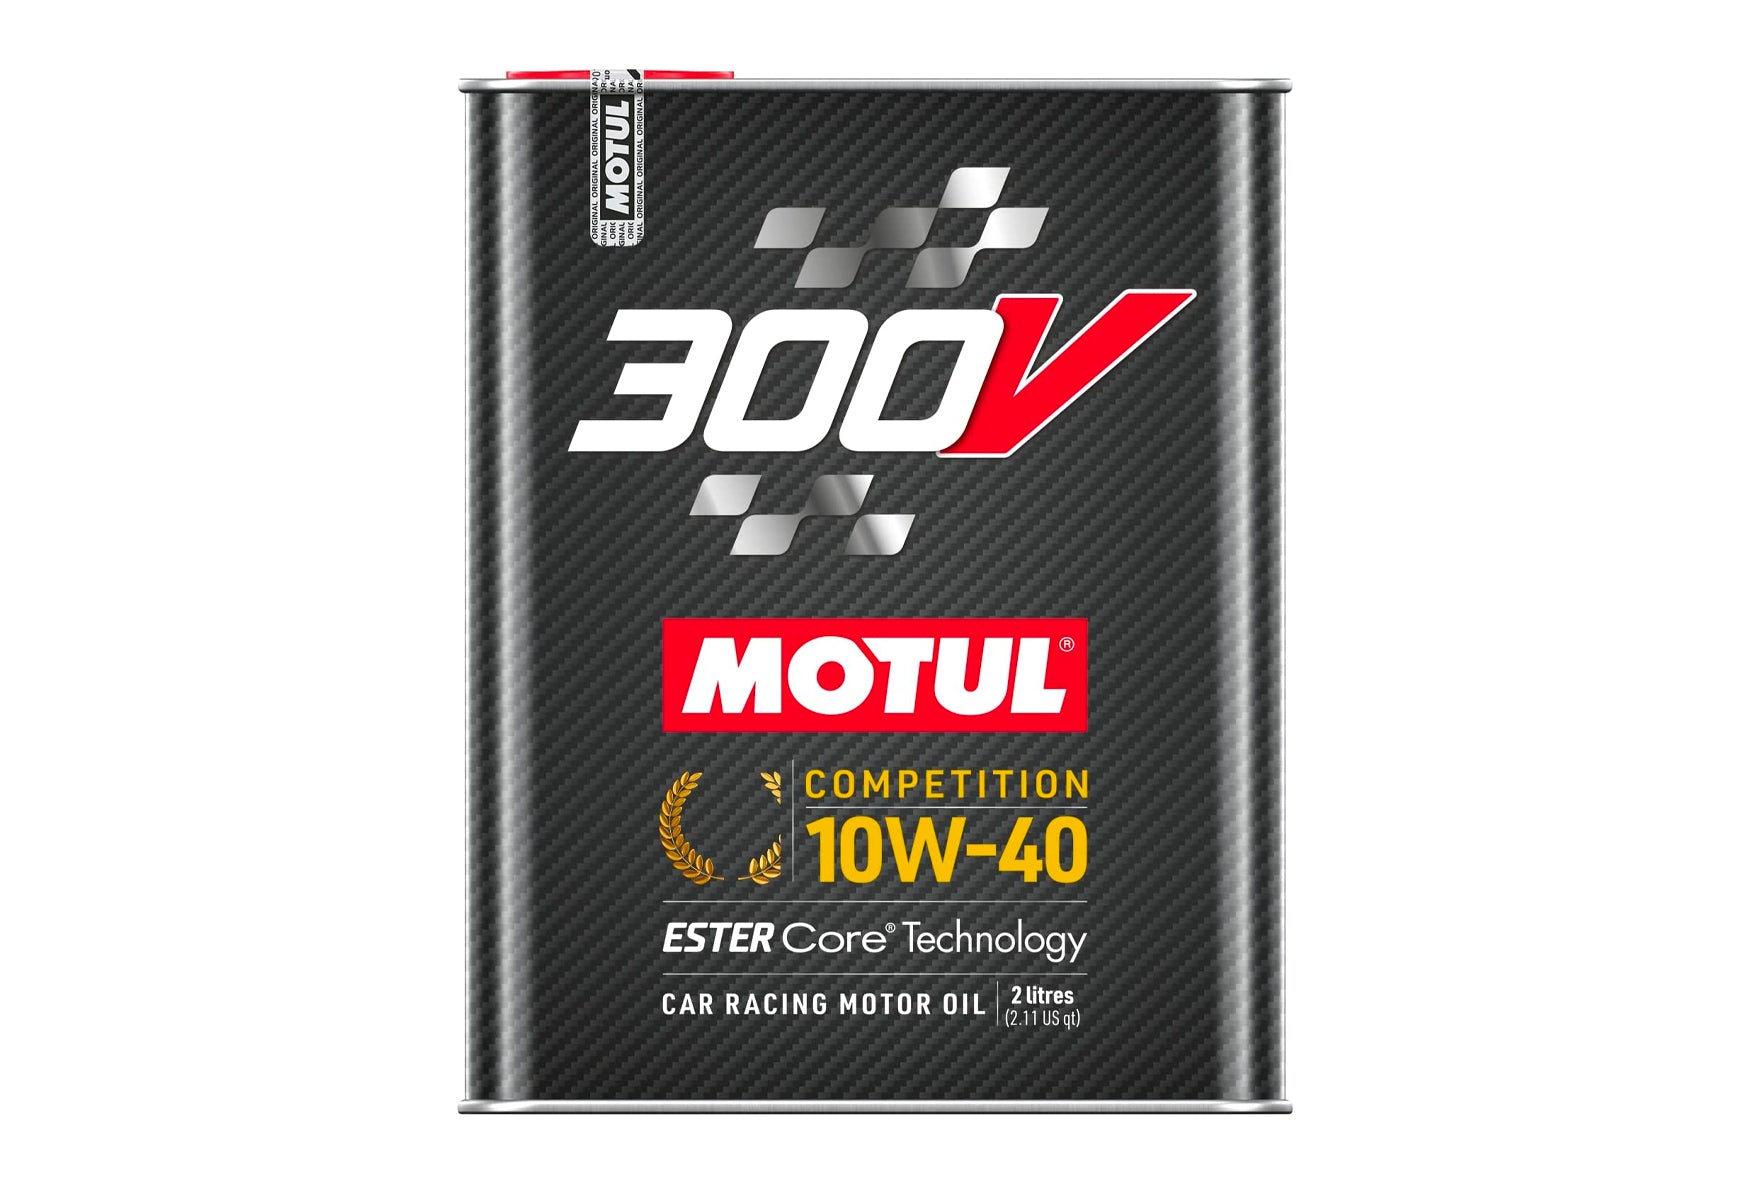 Motul 300V Competition 10W-40 –